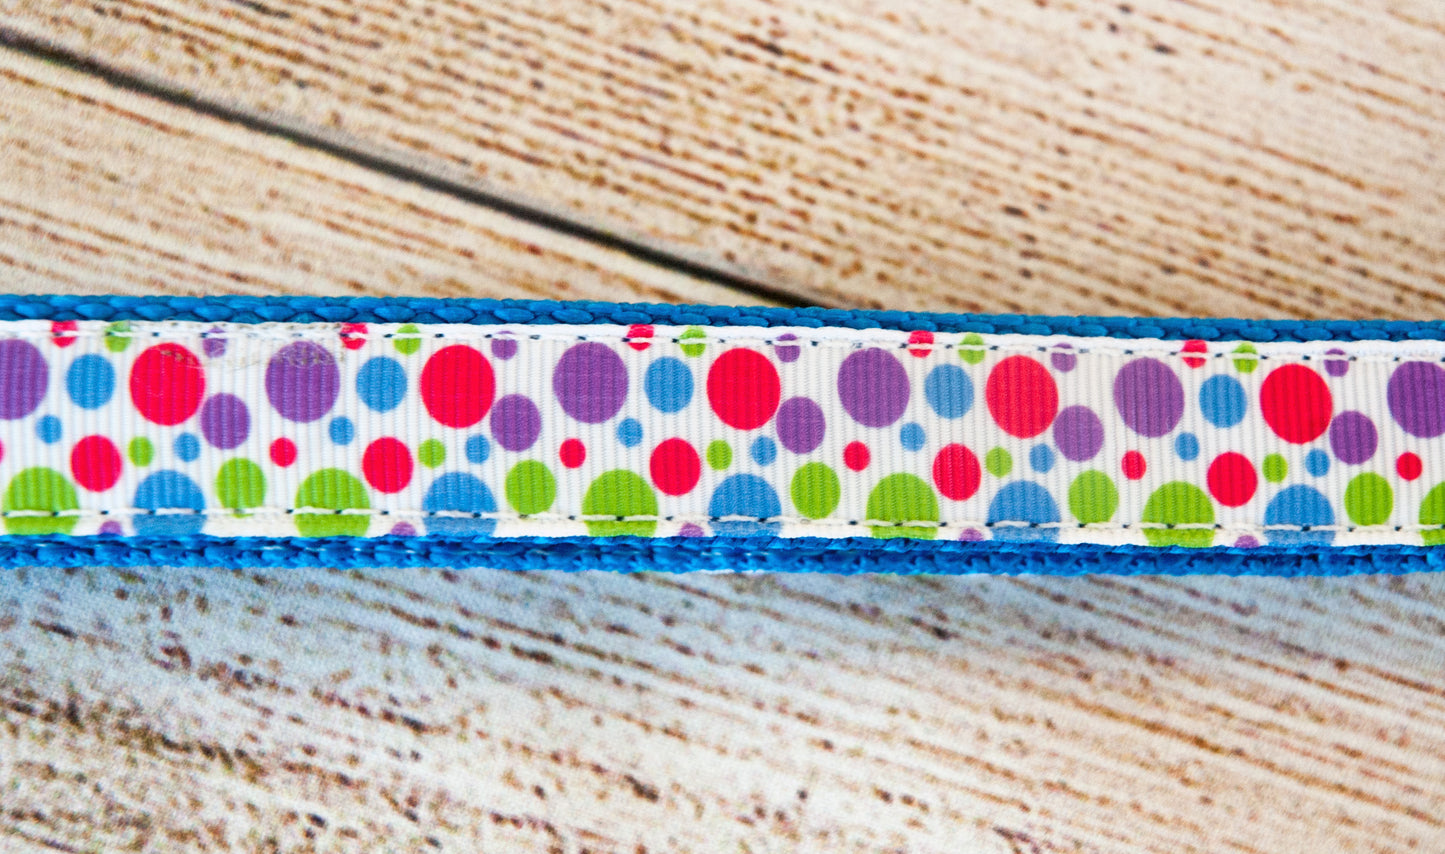 Multi-colored polka dot dog collar. 3/4" wide